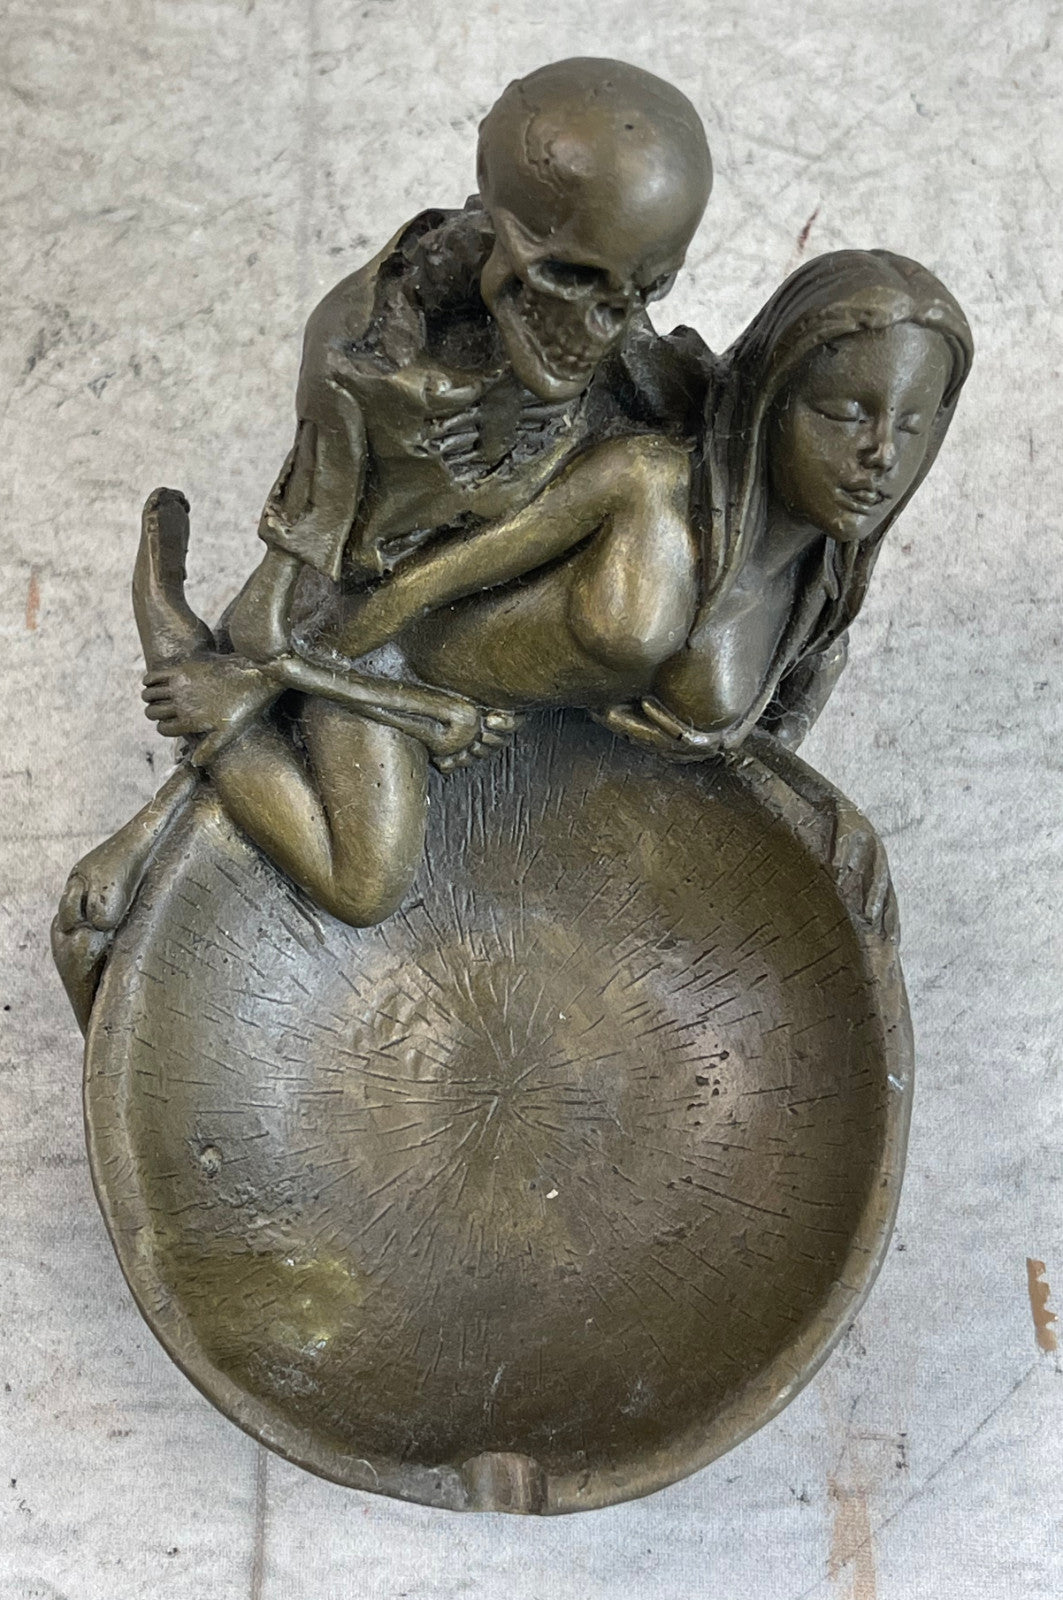 Handcrafted bronze sculpture SALE Ash Girl Nude With Skeleton Cast Hot Deco Art